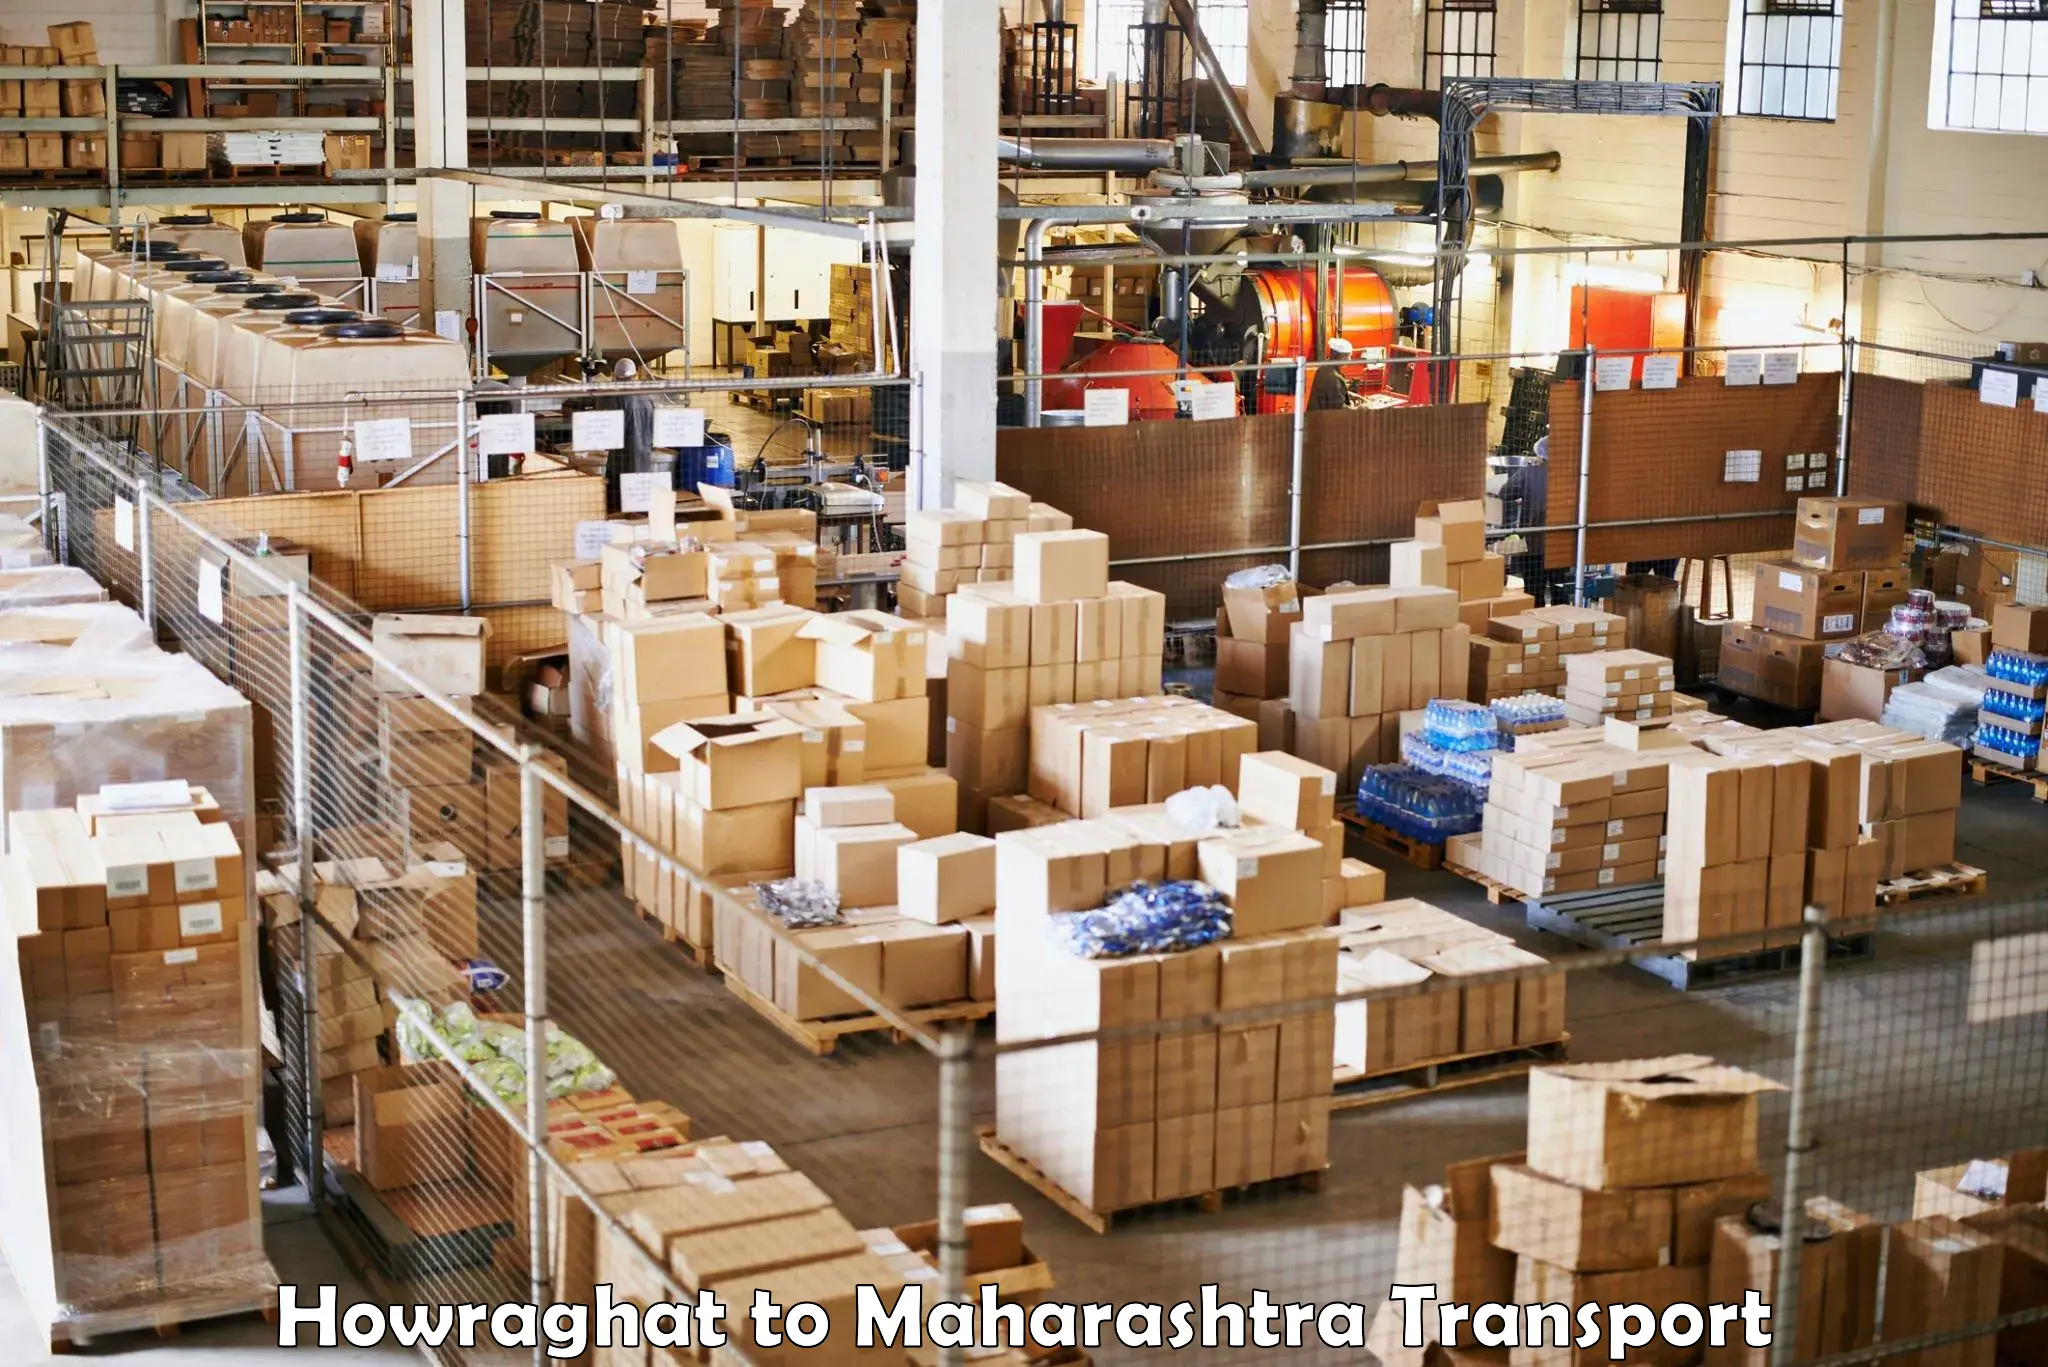 Daily parcel service transport Howraghat to Alibag